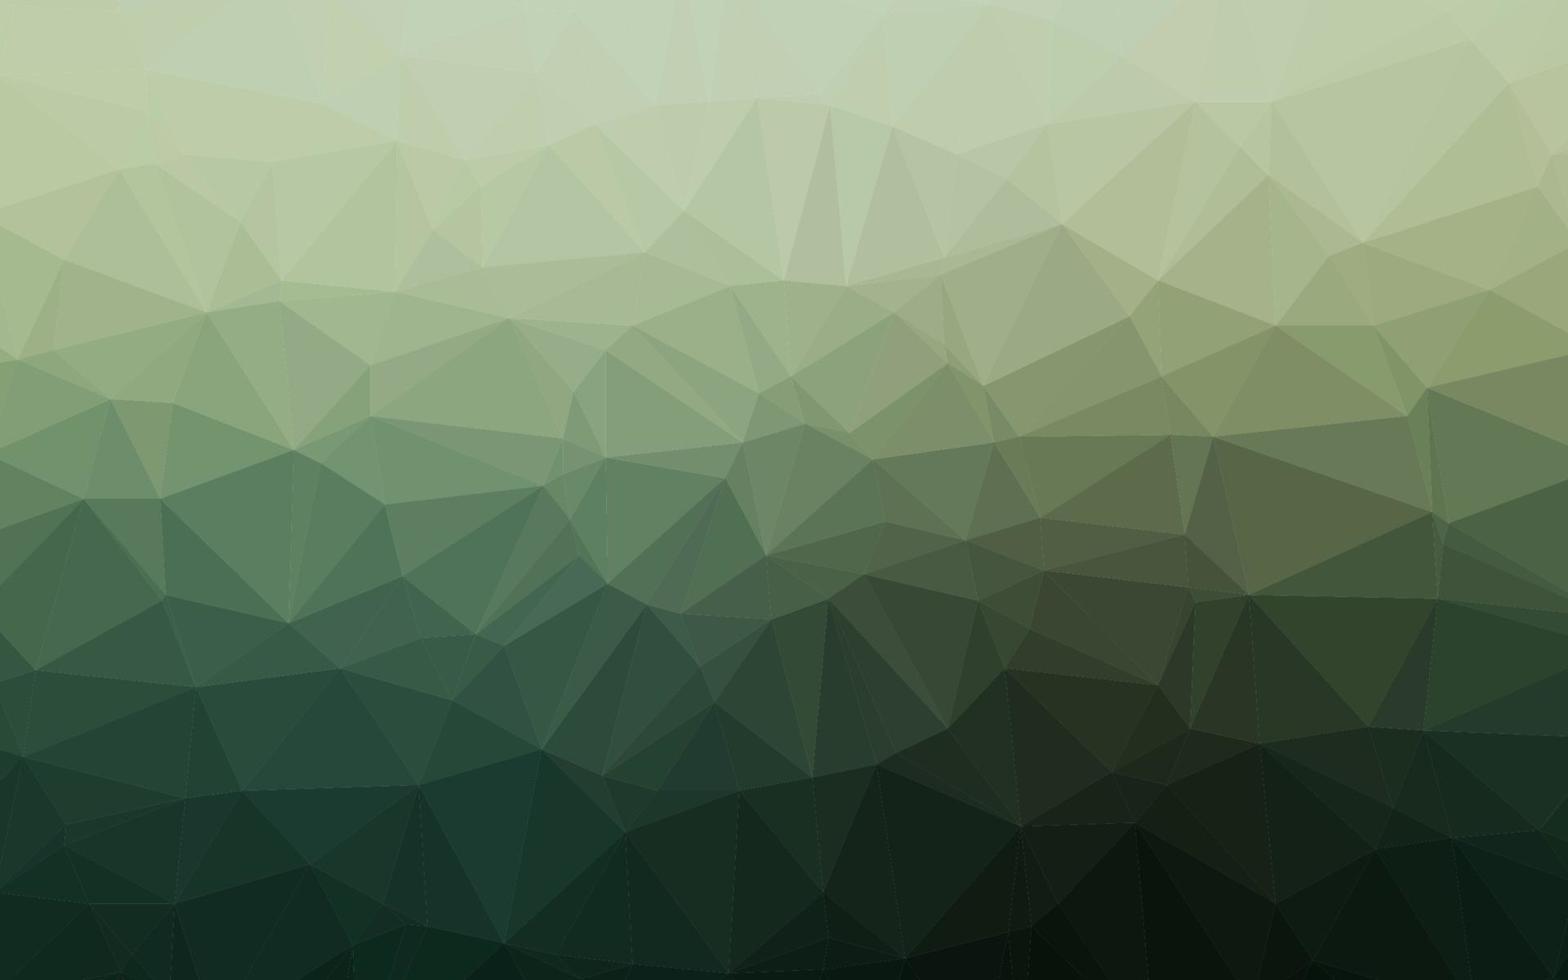 capa de mosaico do triângulo do vetor verde claro.